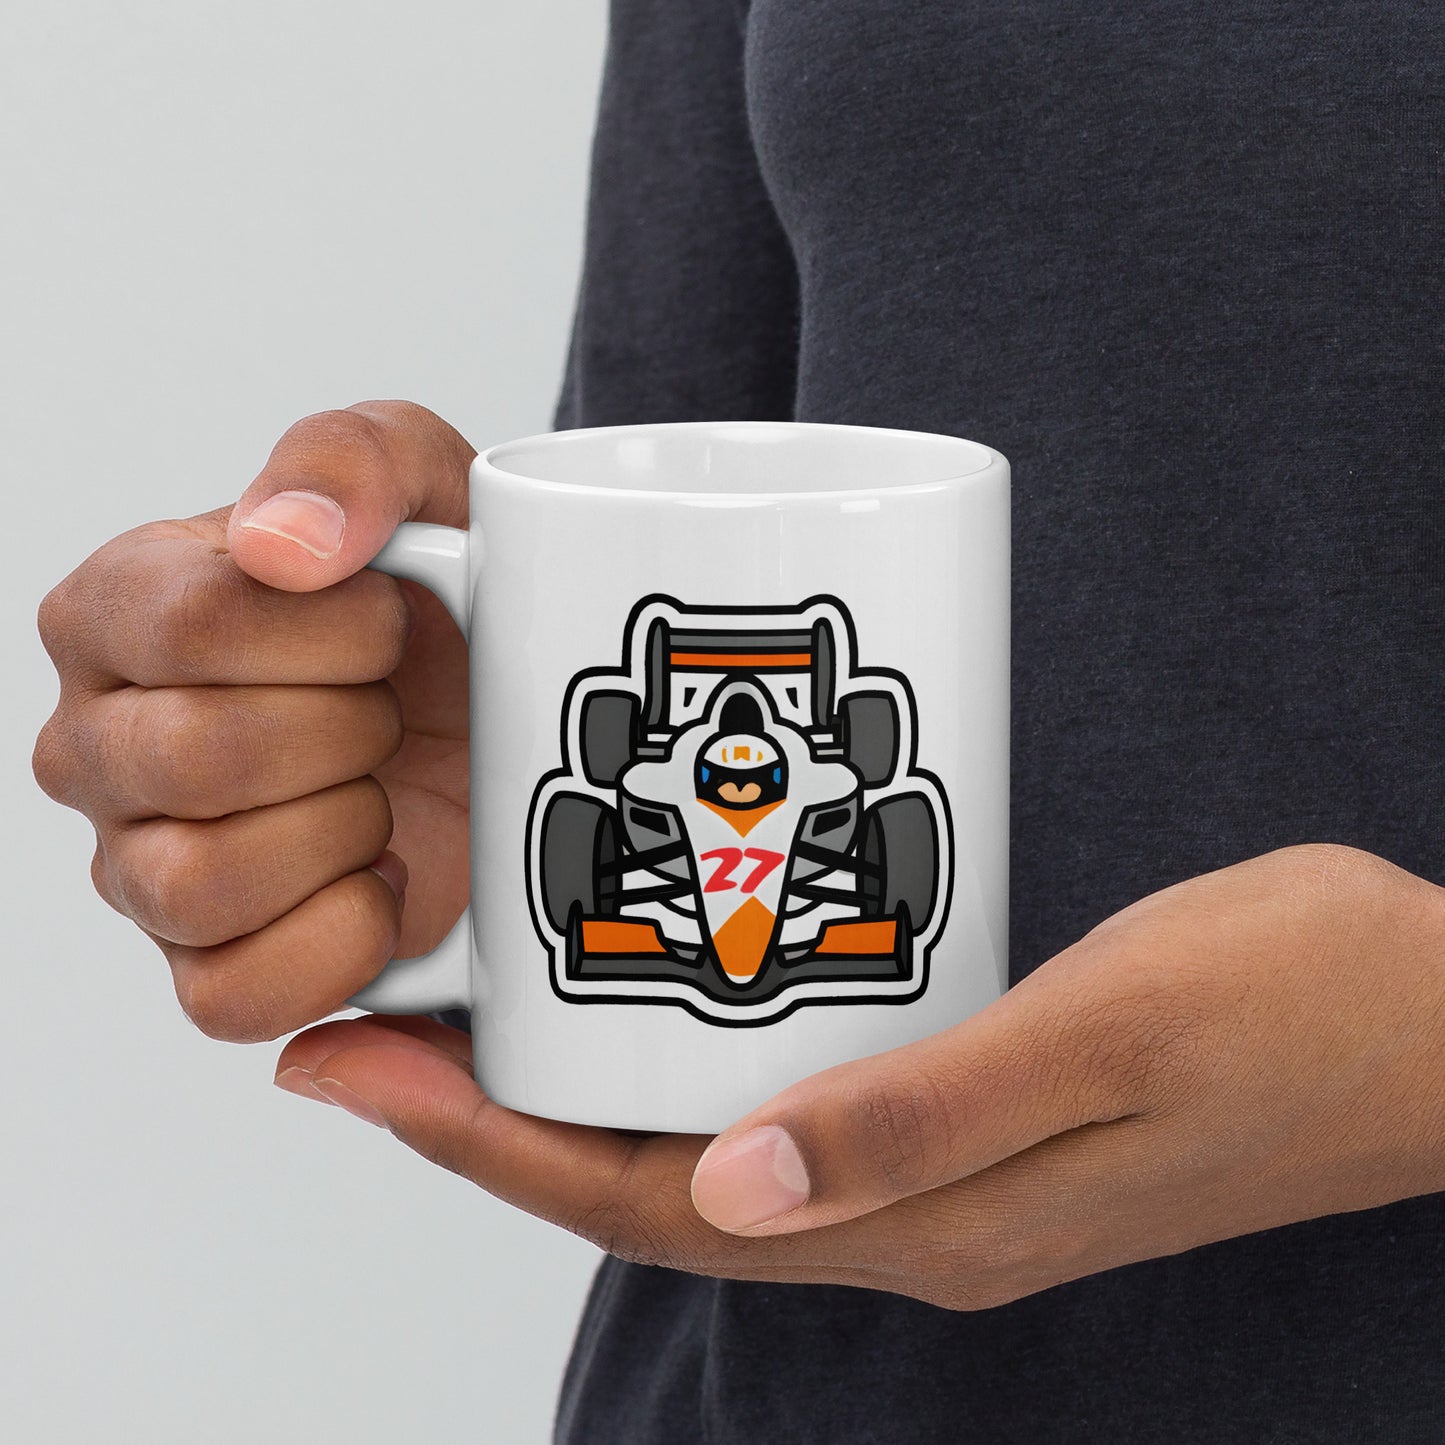 coffee mug showing formula 1 race car cartoon